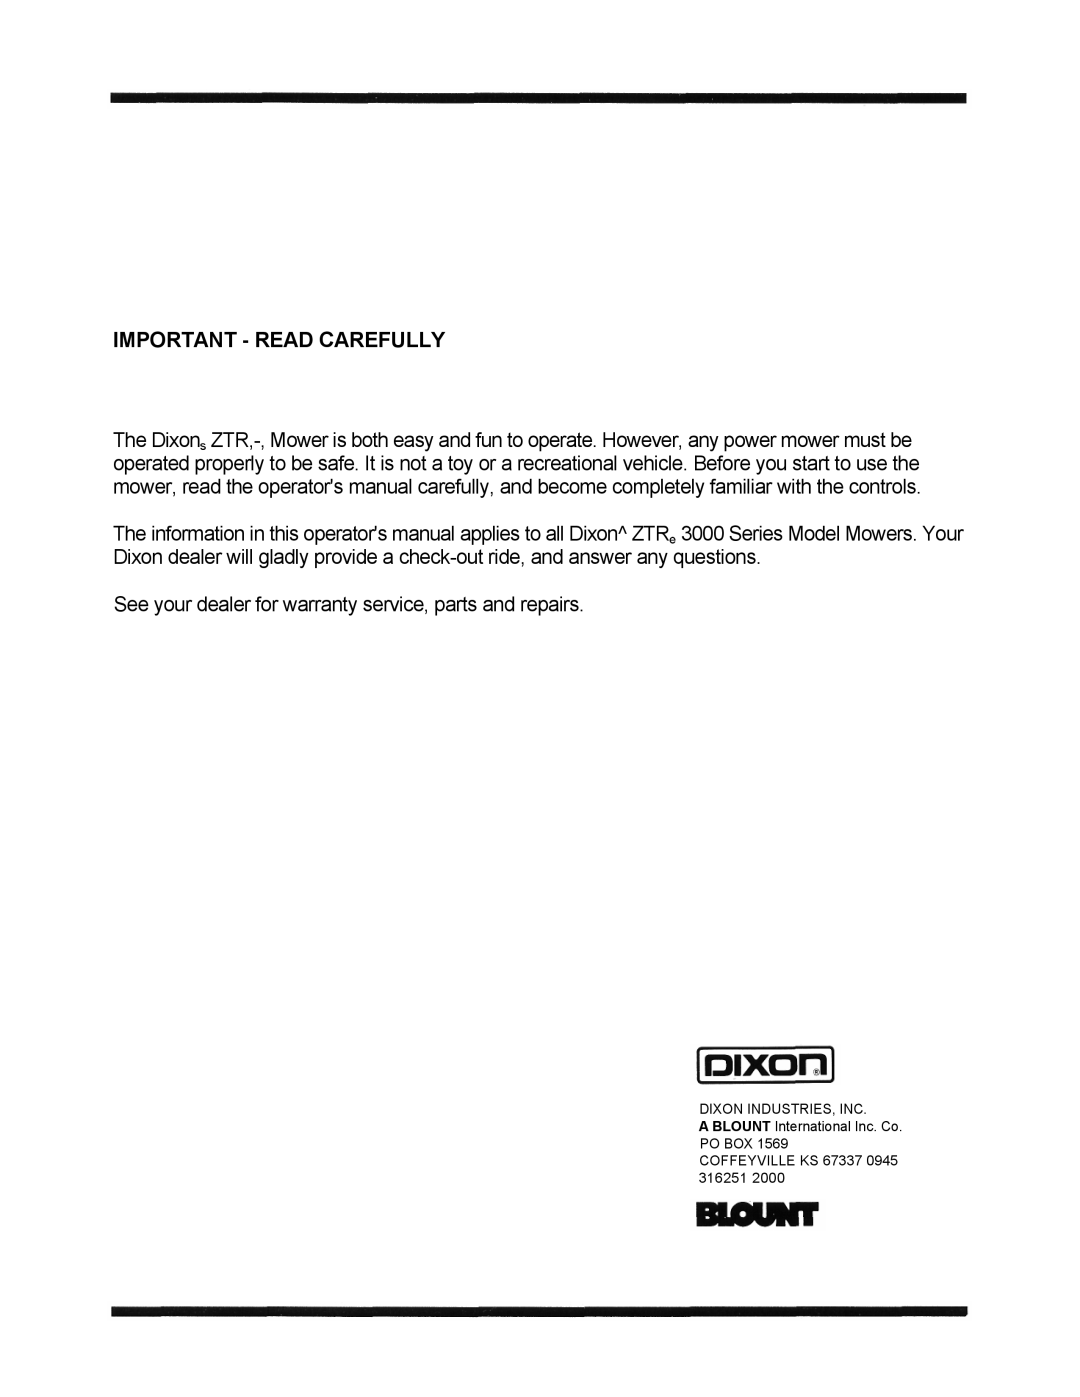 Dixon 3000 Series manual Important - Read Carefully 